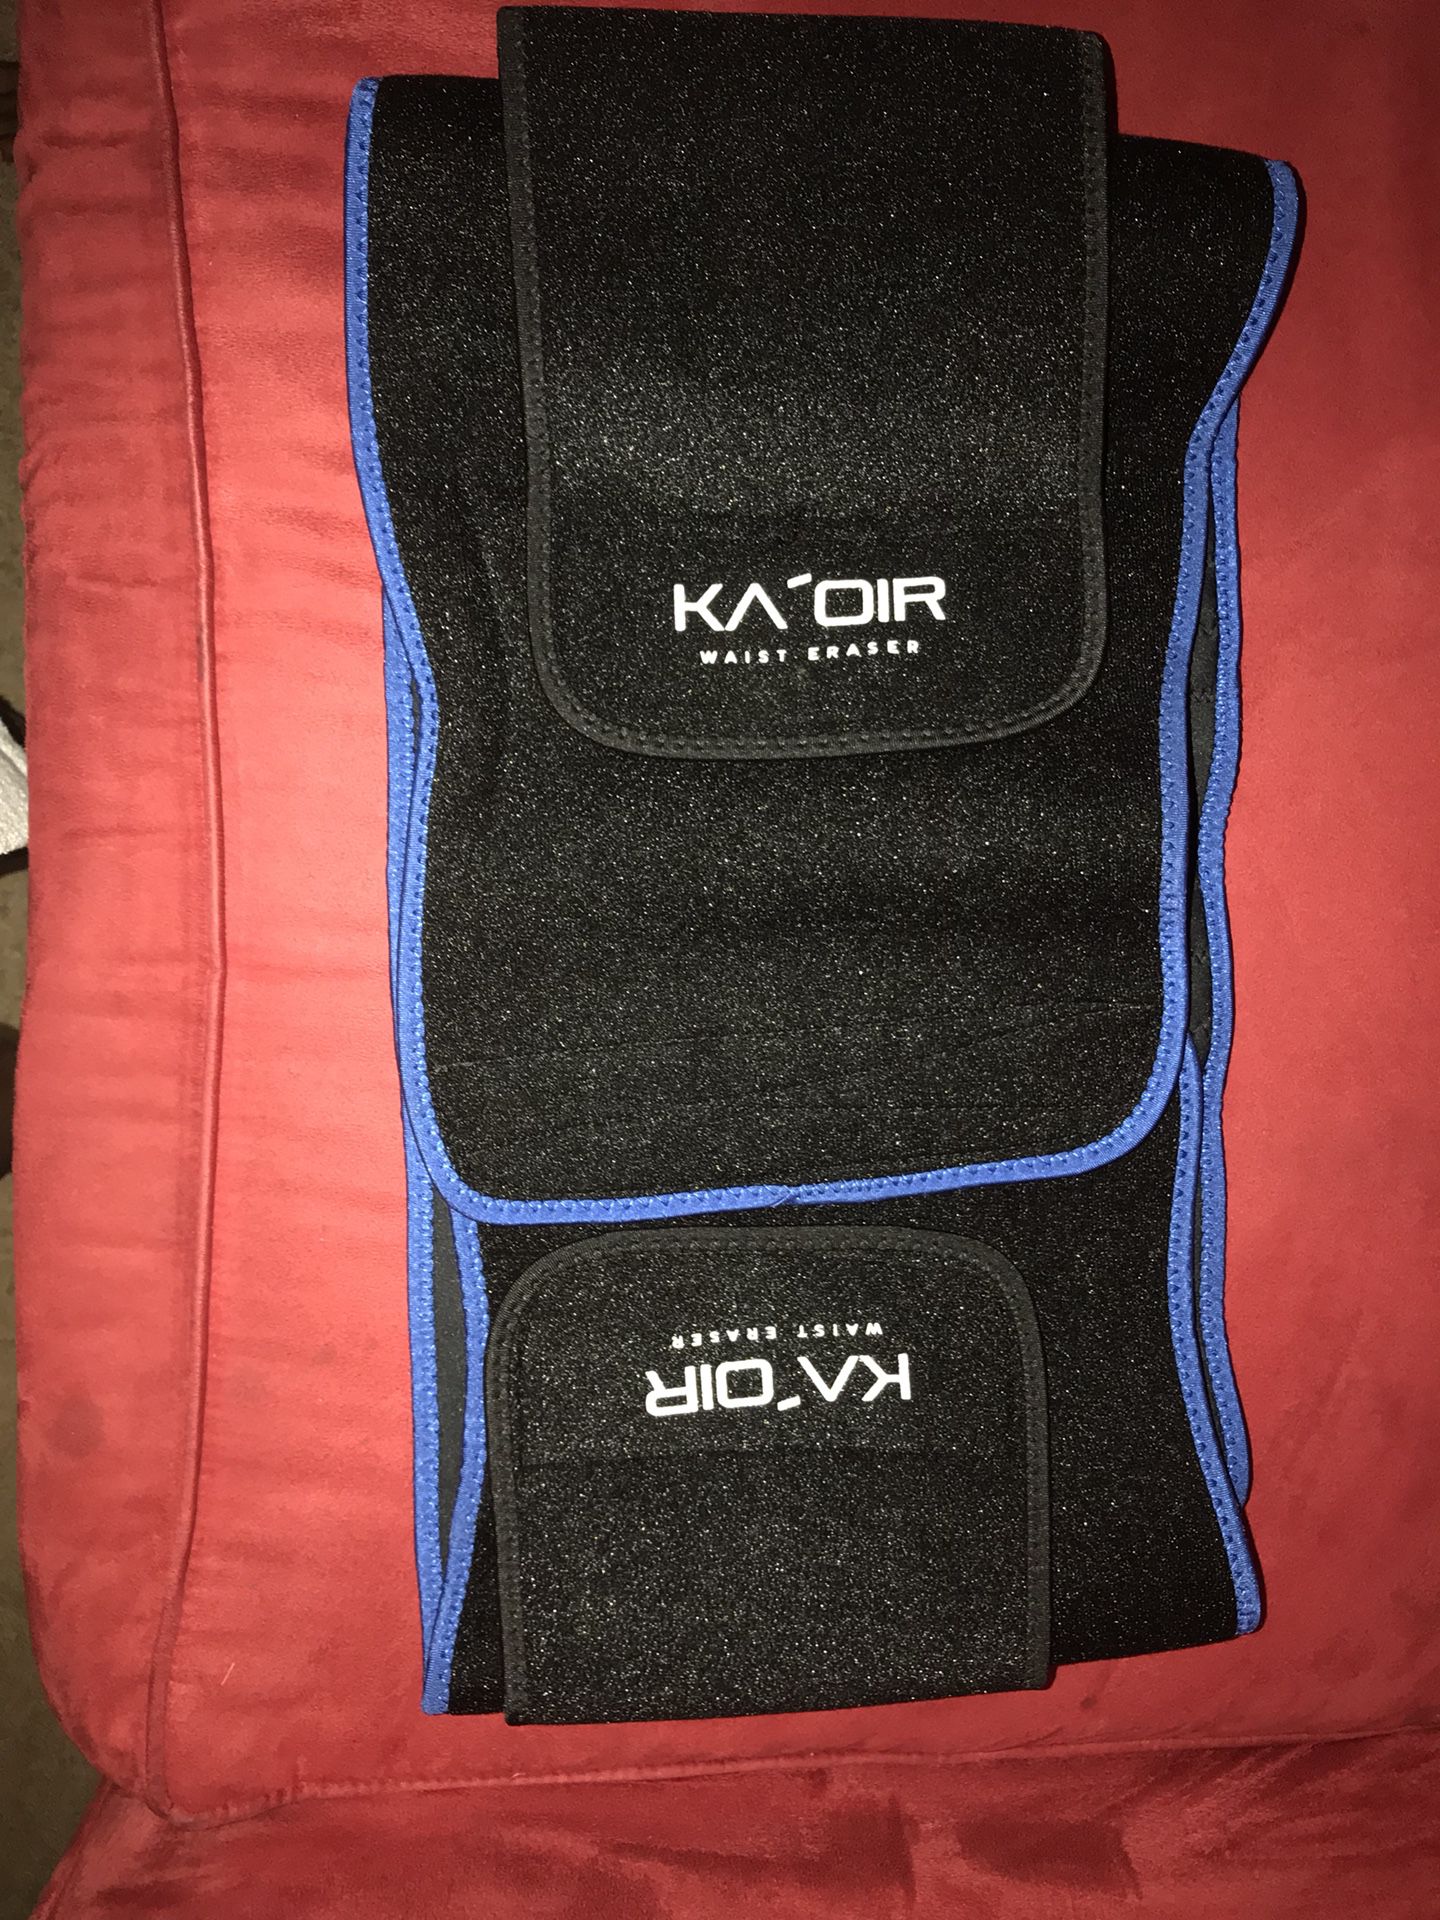 Keyshia Ka'oir waist trainer for Sale in Charlotte, NC - OfferUp